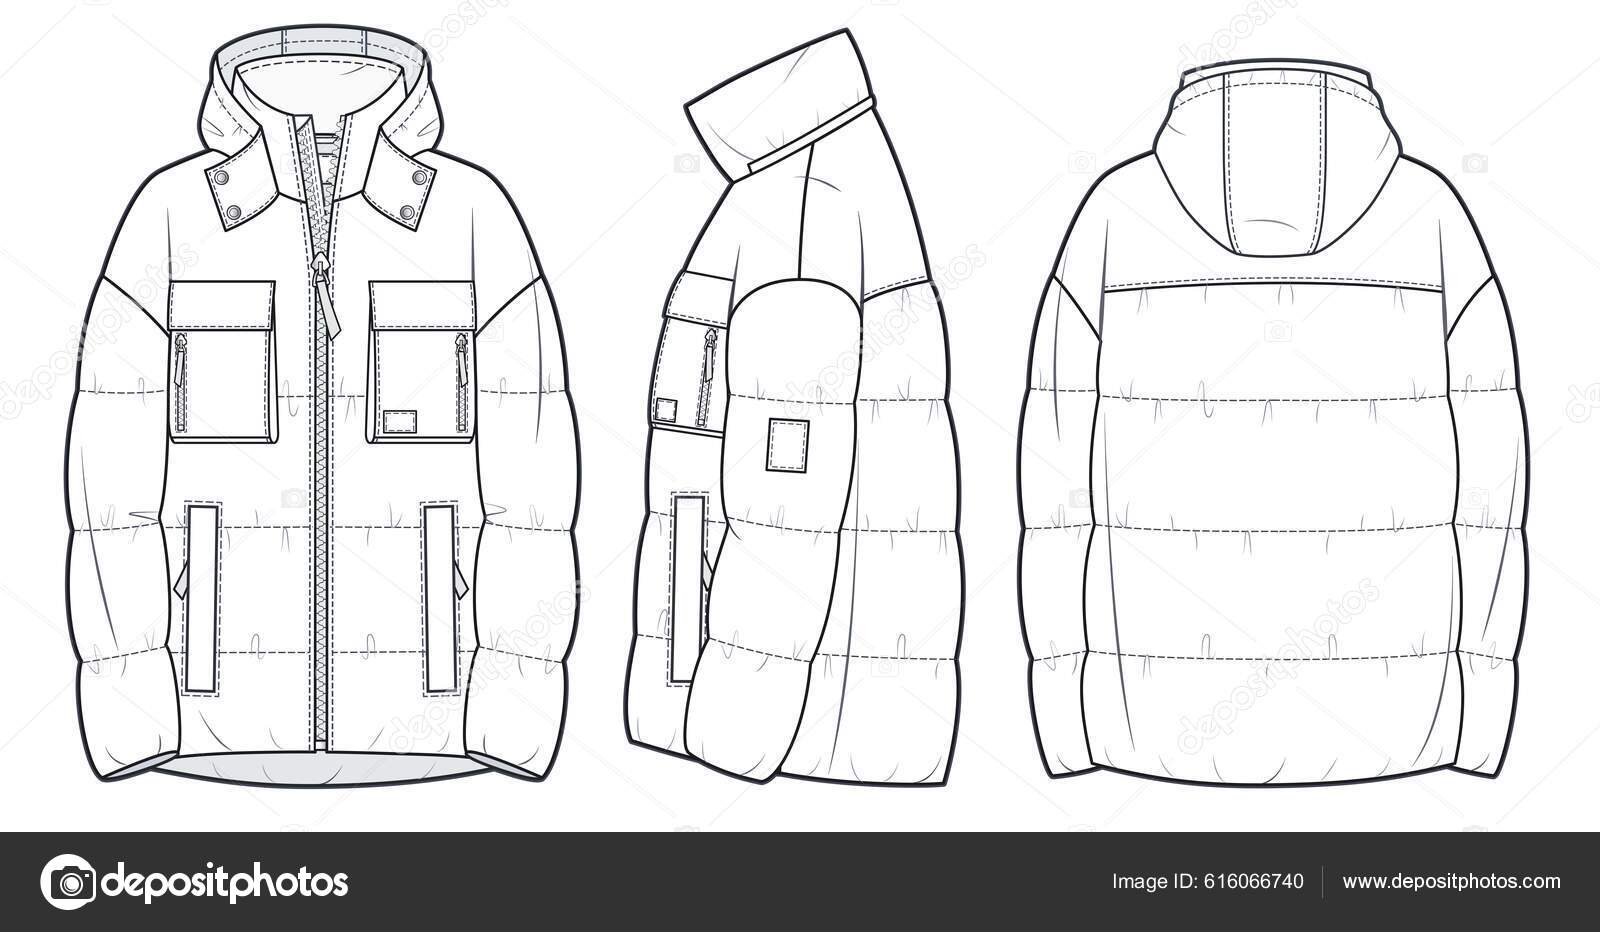 https://st.depositphotos.com/65155874/61606/v/1600/depositphotos_616066740-stock-illustration-hooded-jacket-coat-technical-fashion.jpg